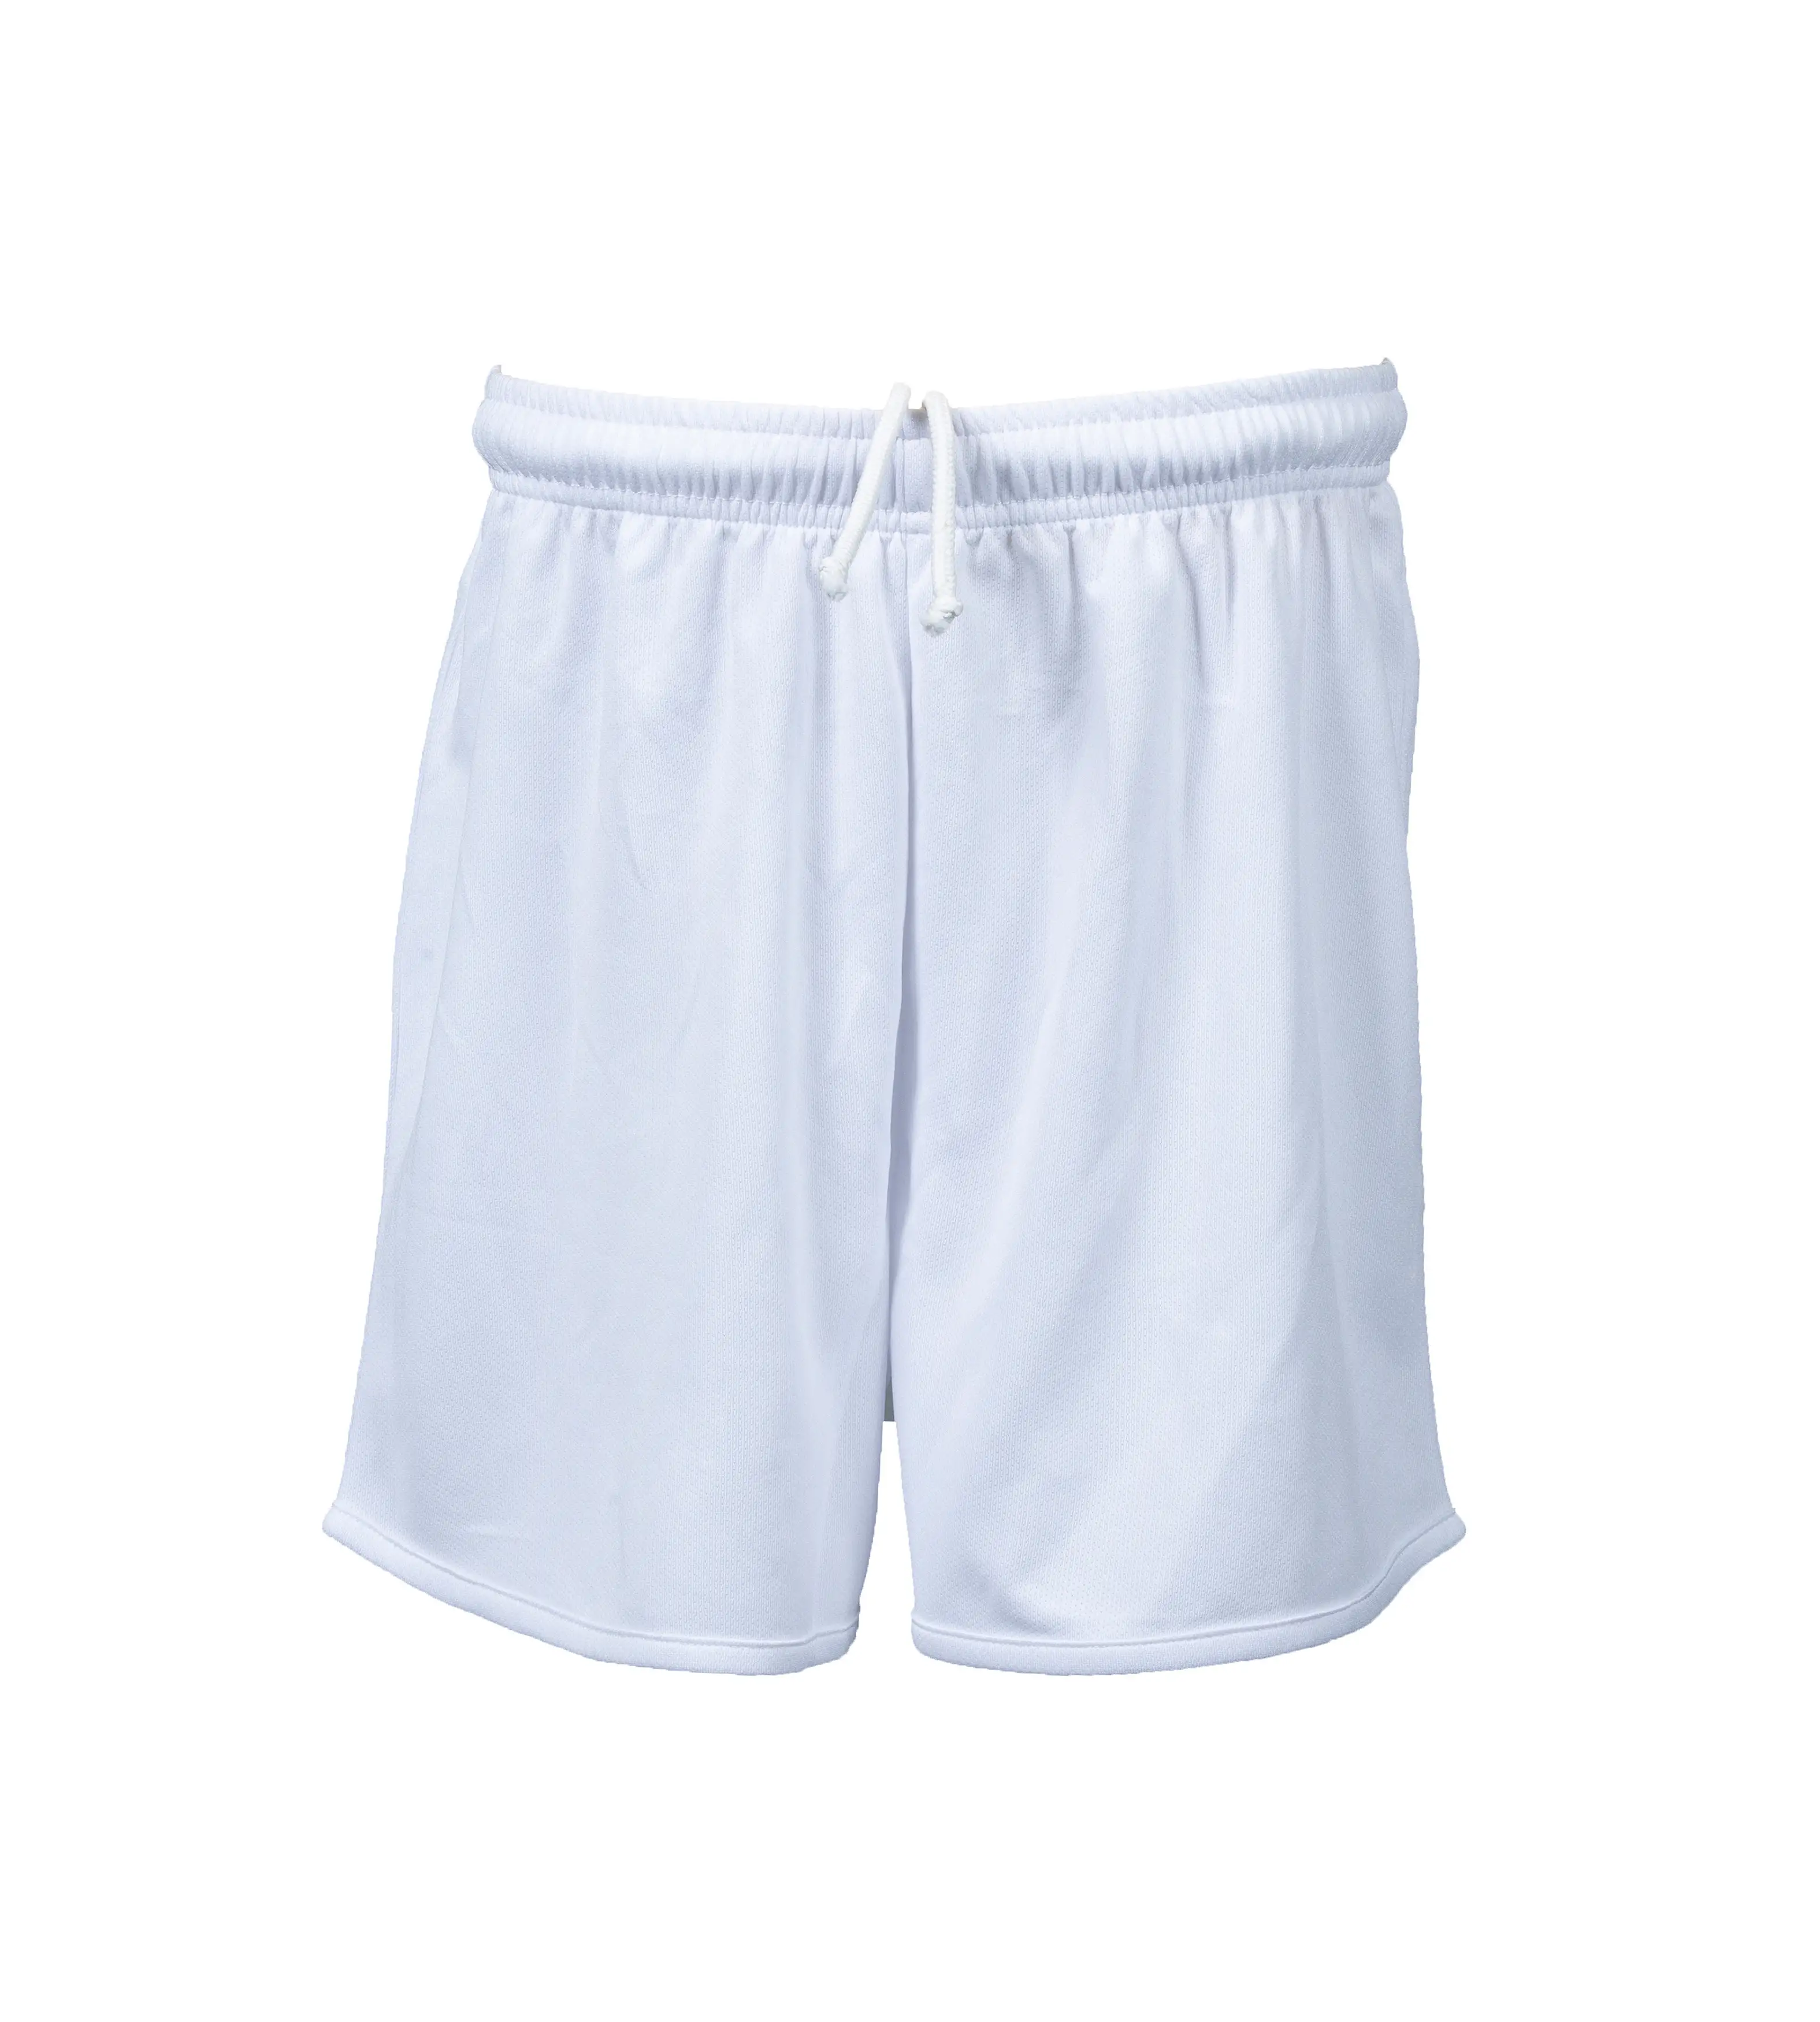 Pantalone lima man - white - s